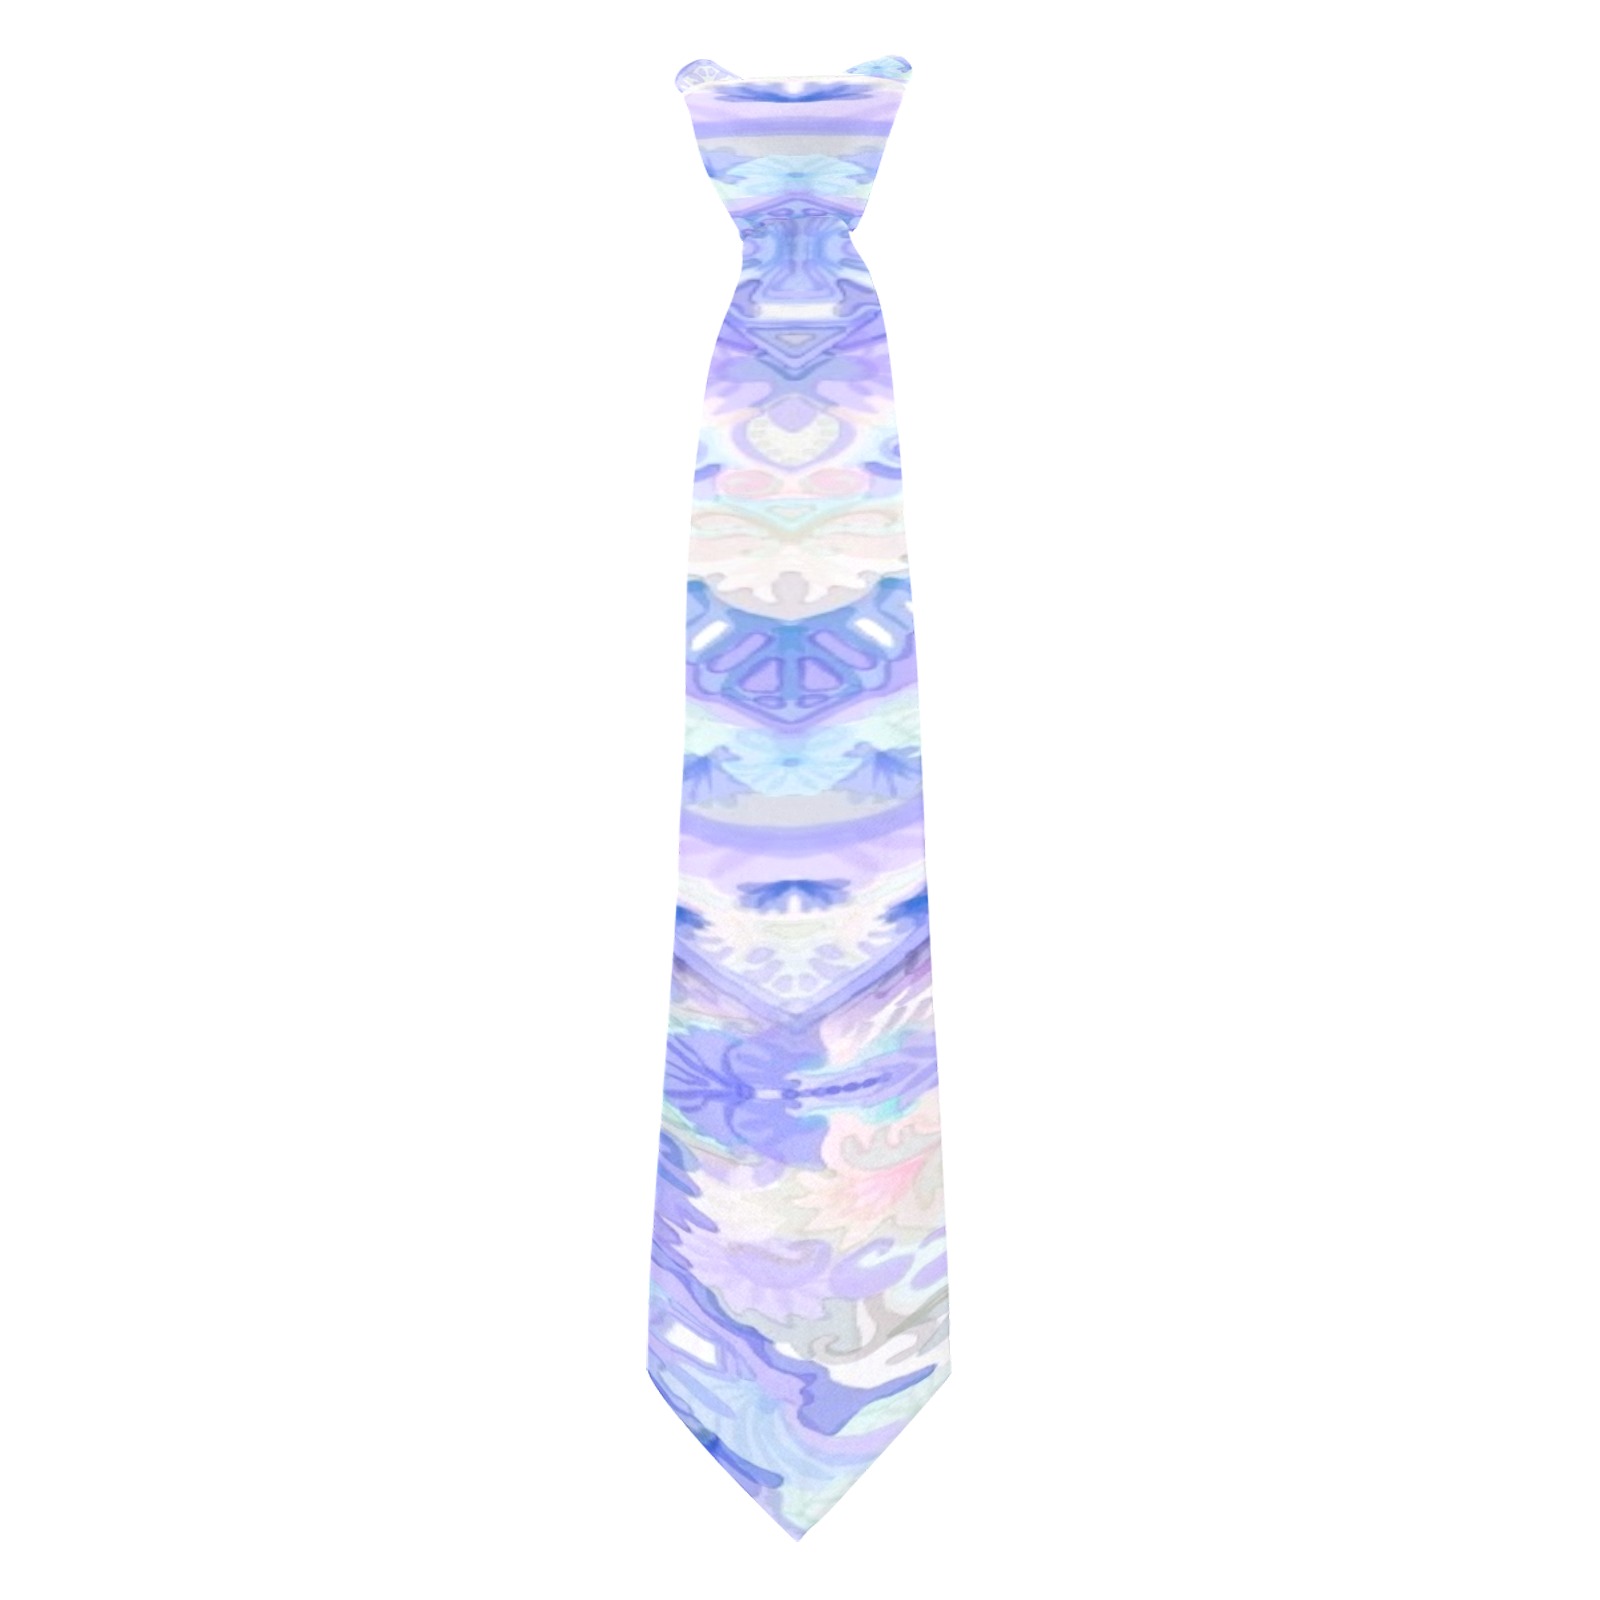 reveil blue Custom Peekaboo Tie with Hidden Picture